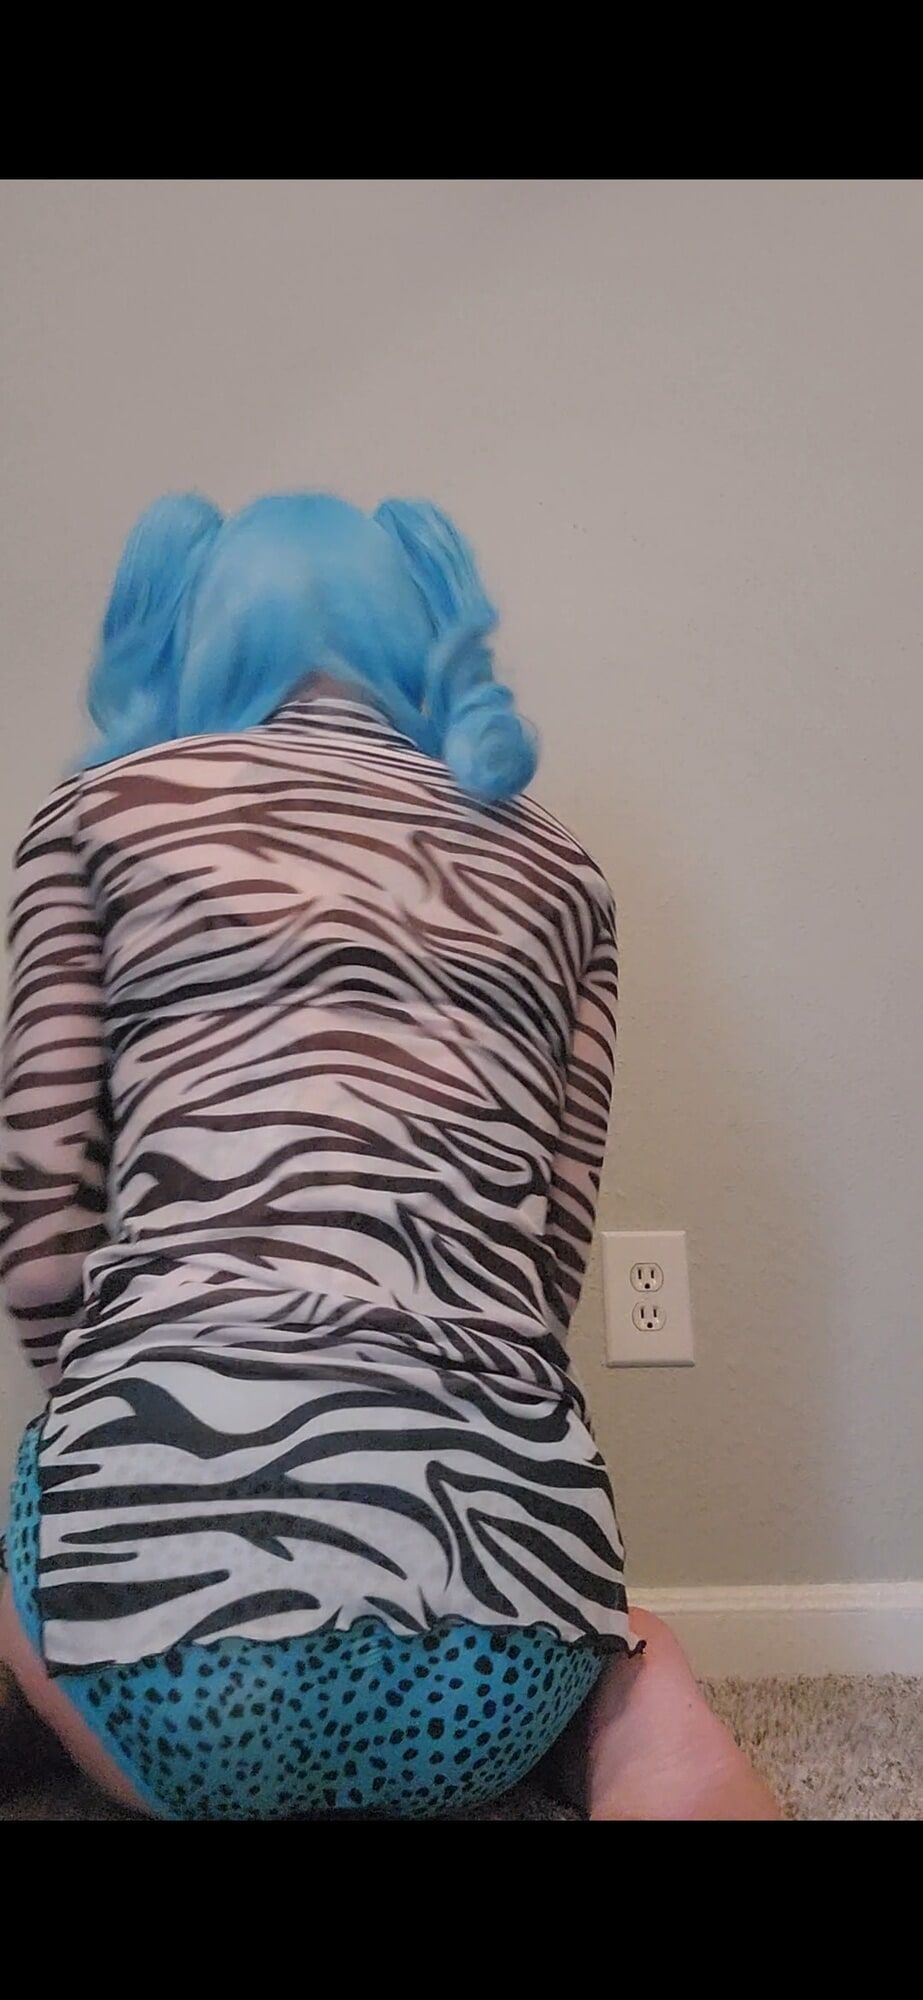 Blue wig and zebra print dress #3